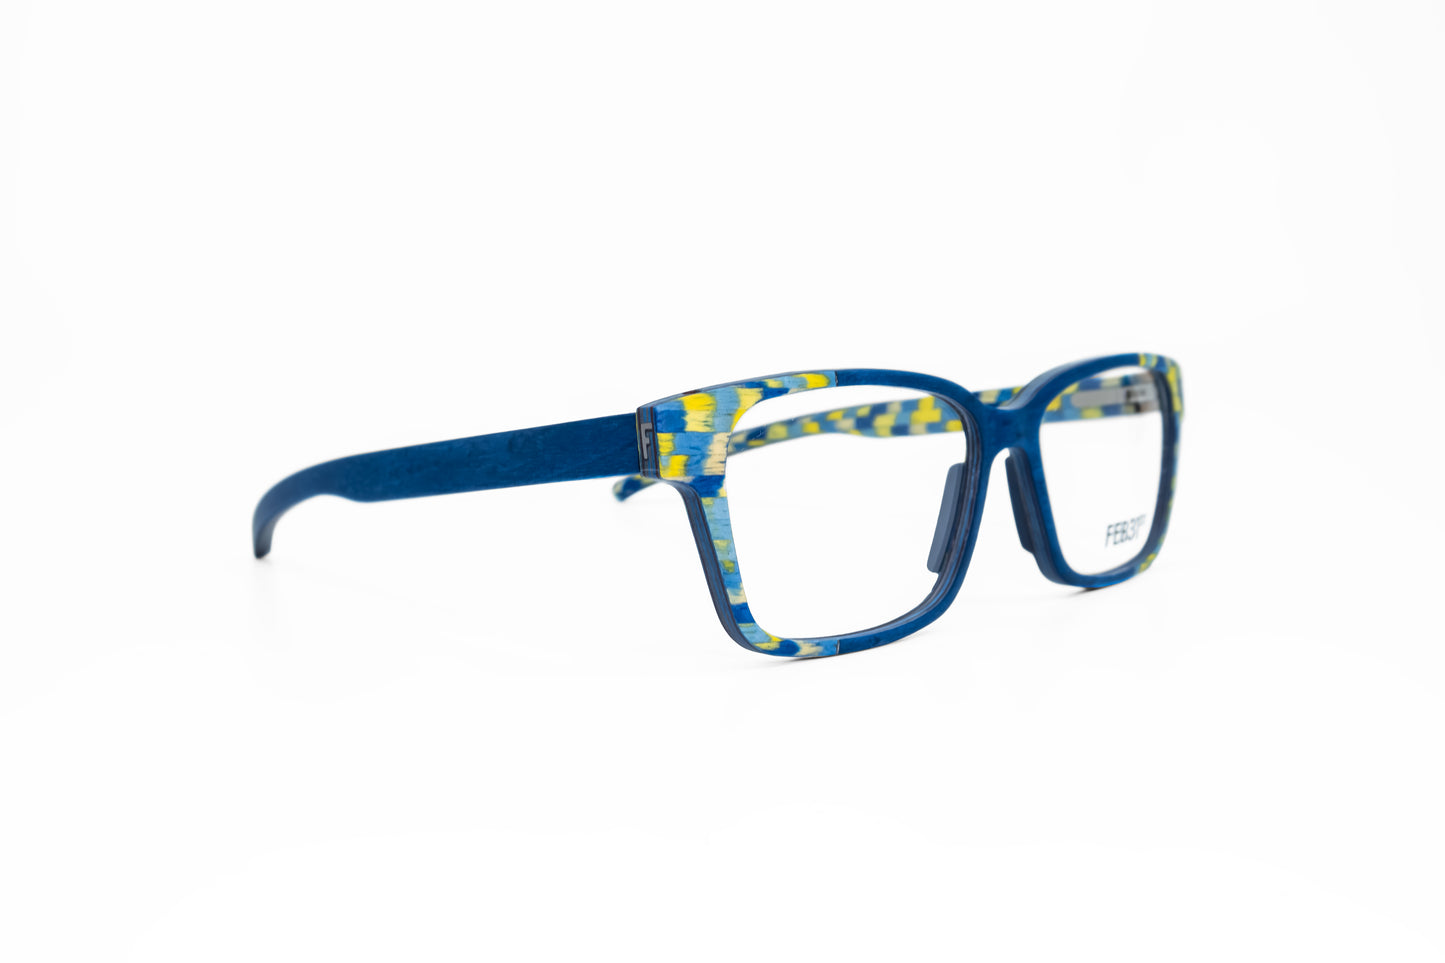 Kara by FEB31st wooden glasses blue